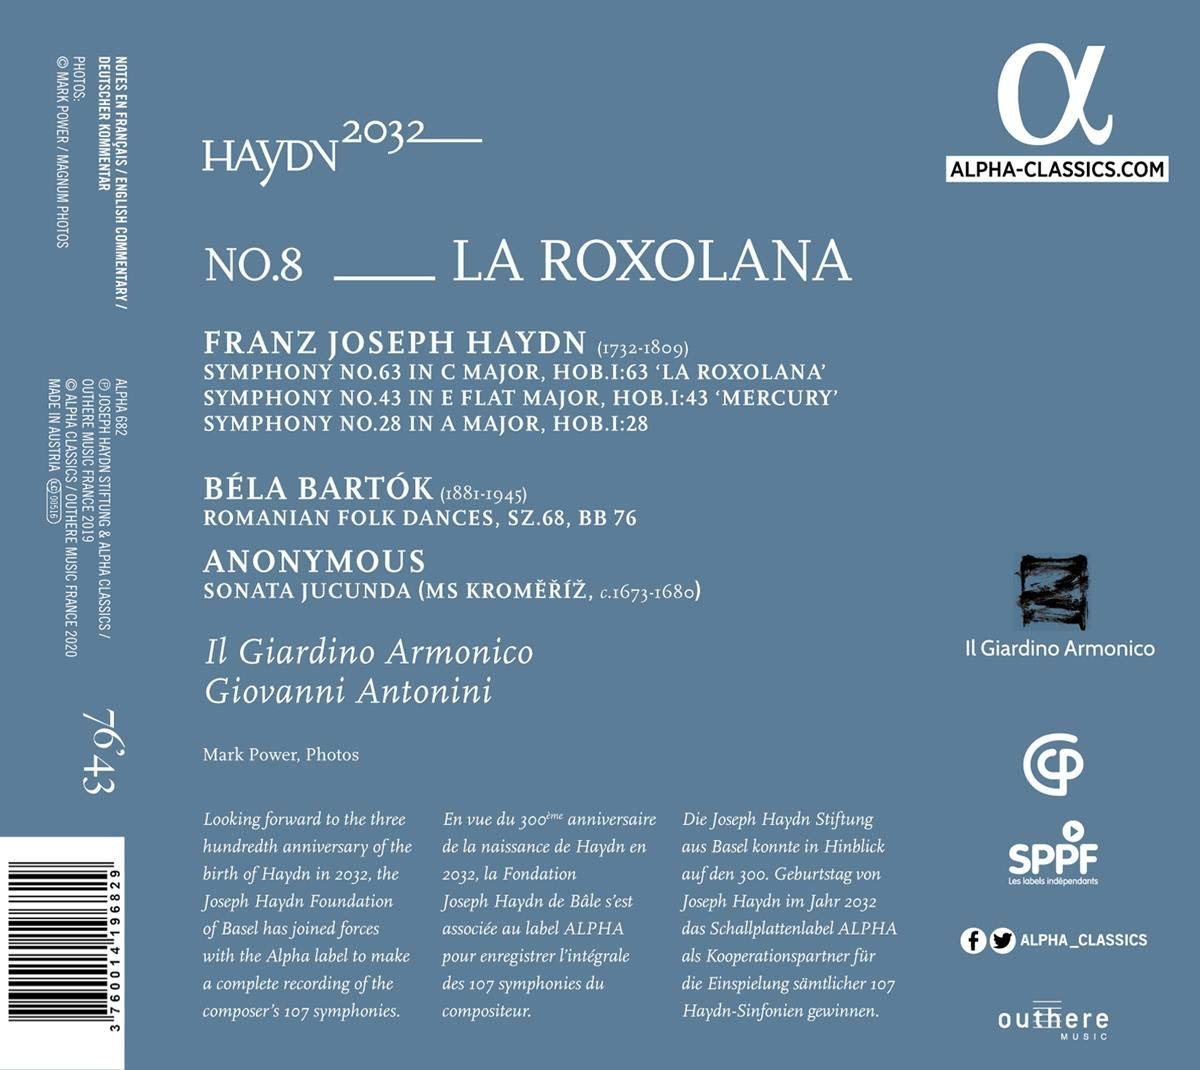 Giovanni Antonini 하이든 2032 프로젝트 8집 (Haydn 2032 Vol. 8 - La Roxolana)